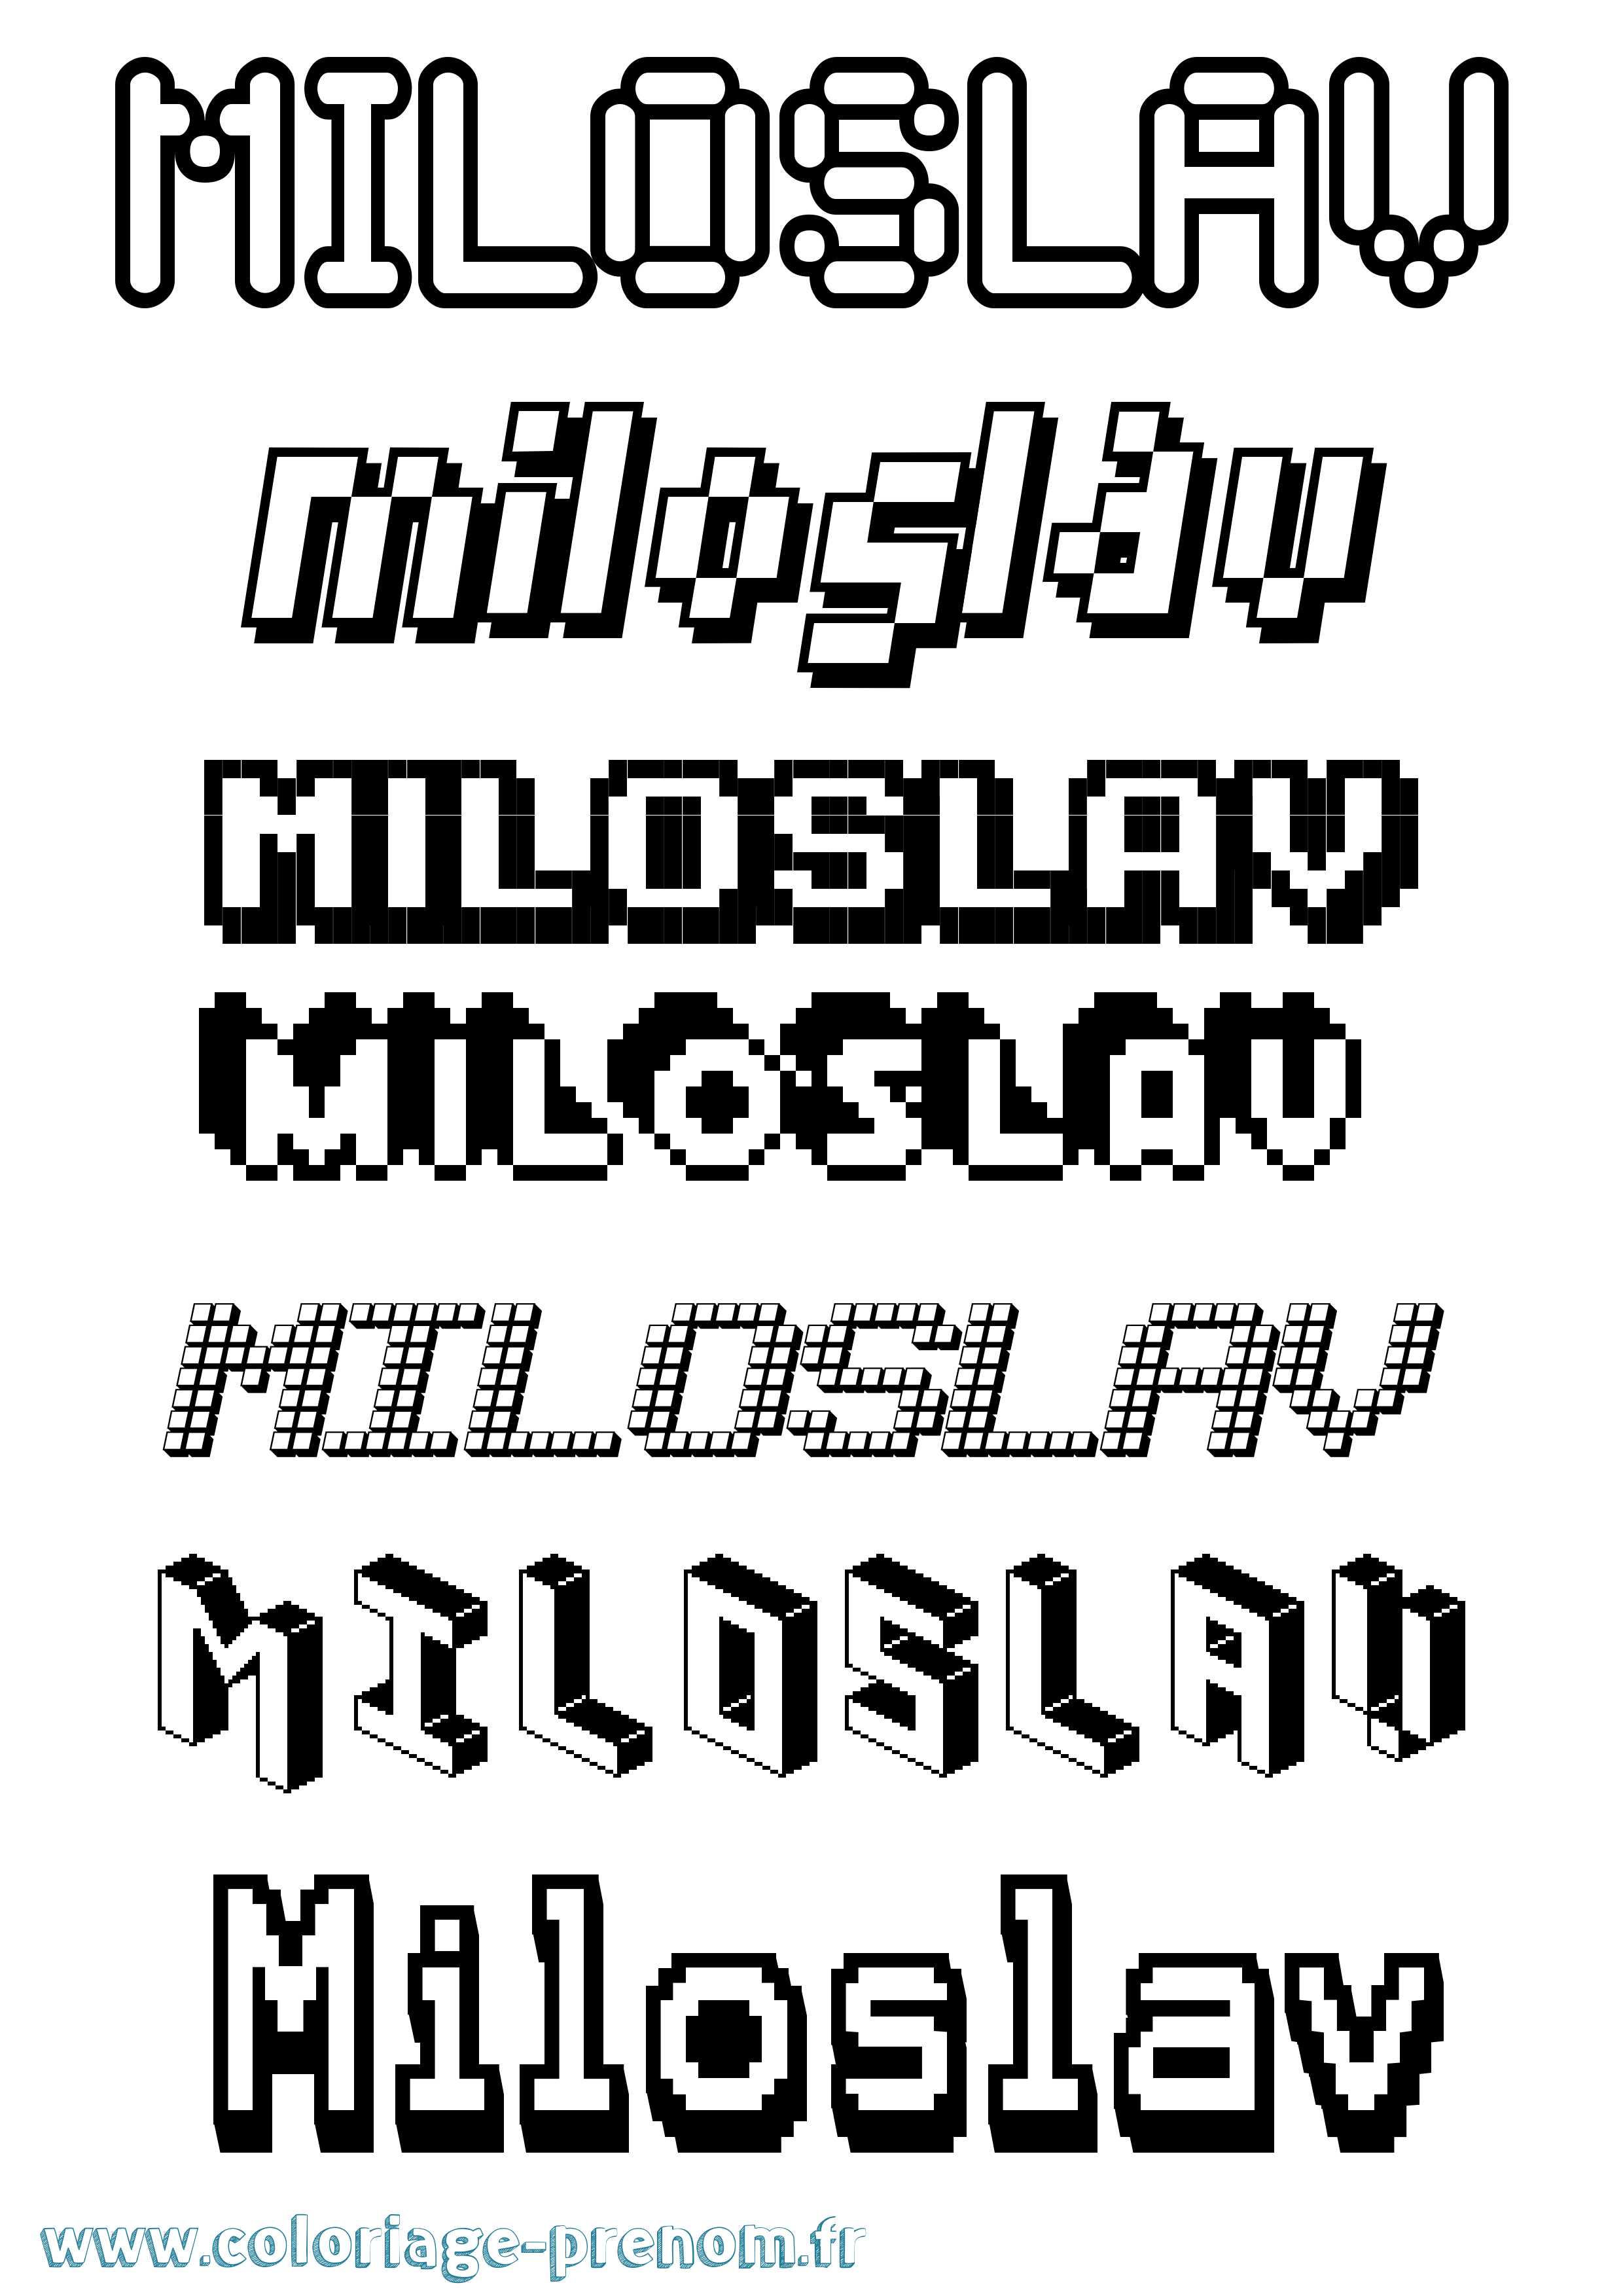 Coloriage prénom Miloslav Pixel